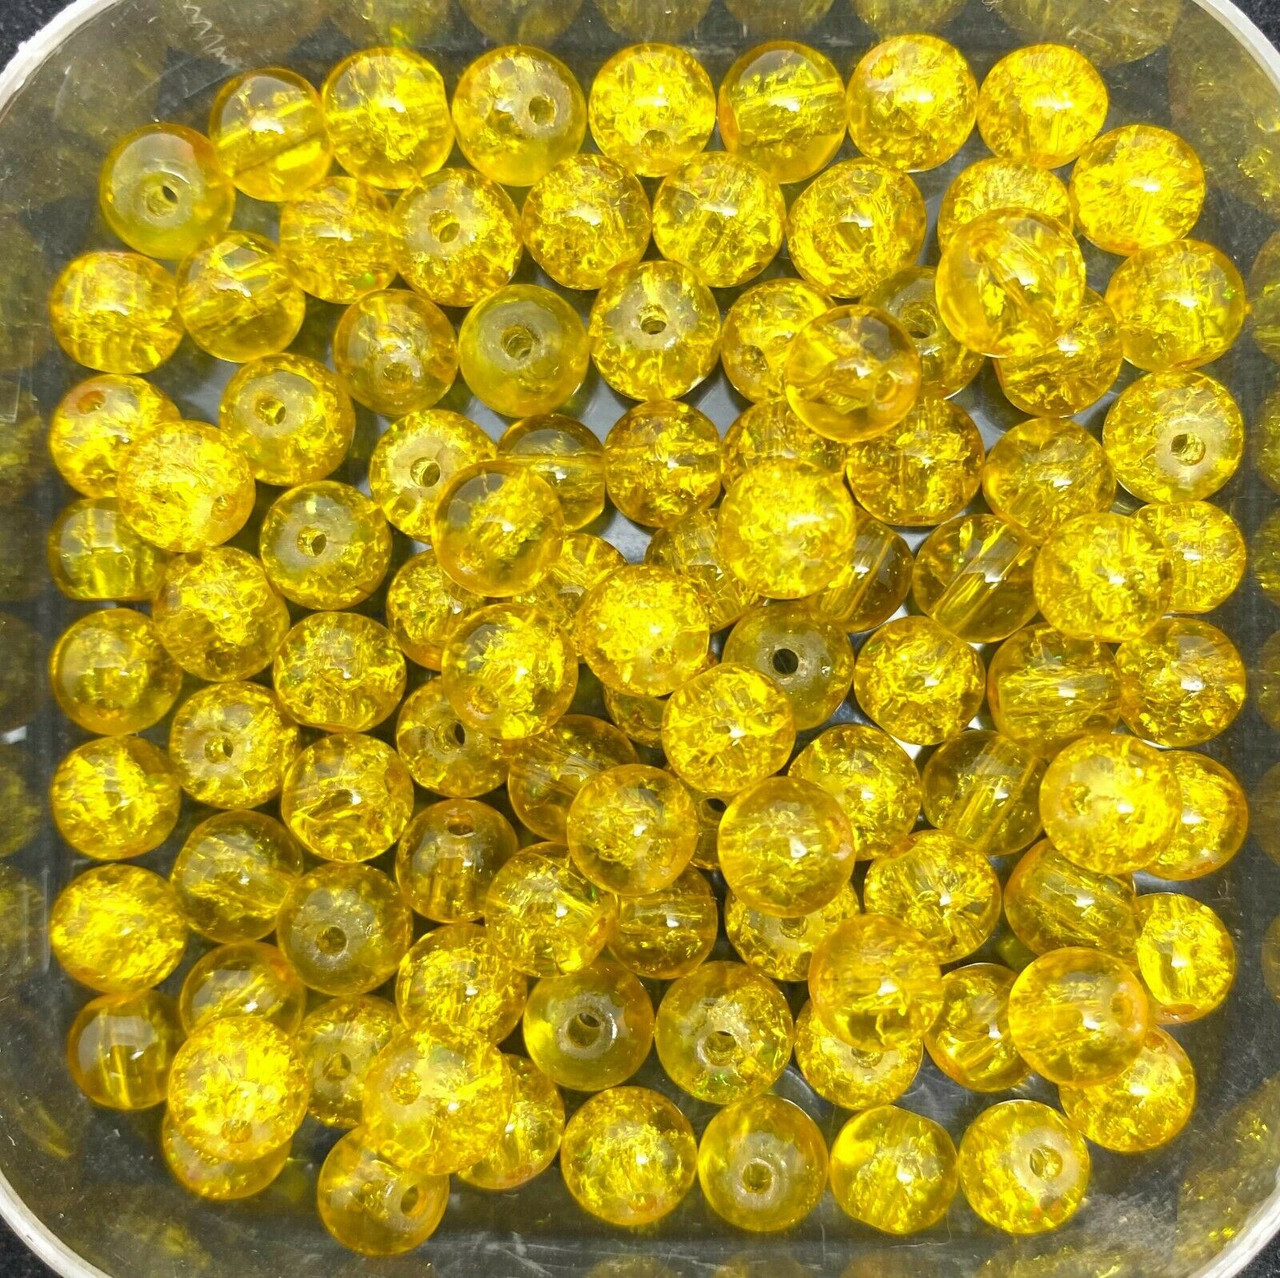 8mm Crackle Glass Beads - Sunshine Yellow, 50 beads